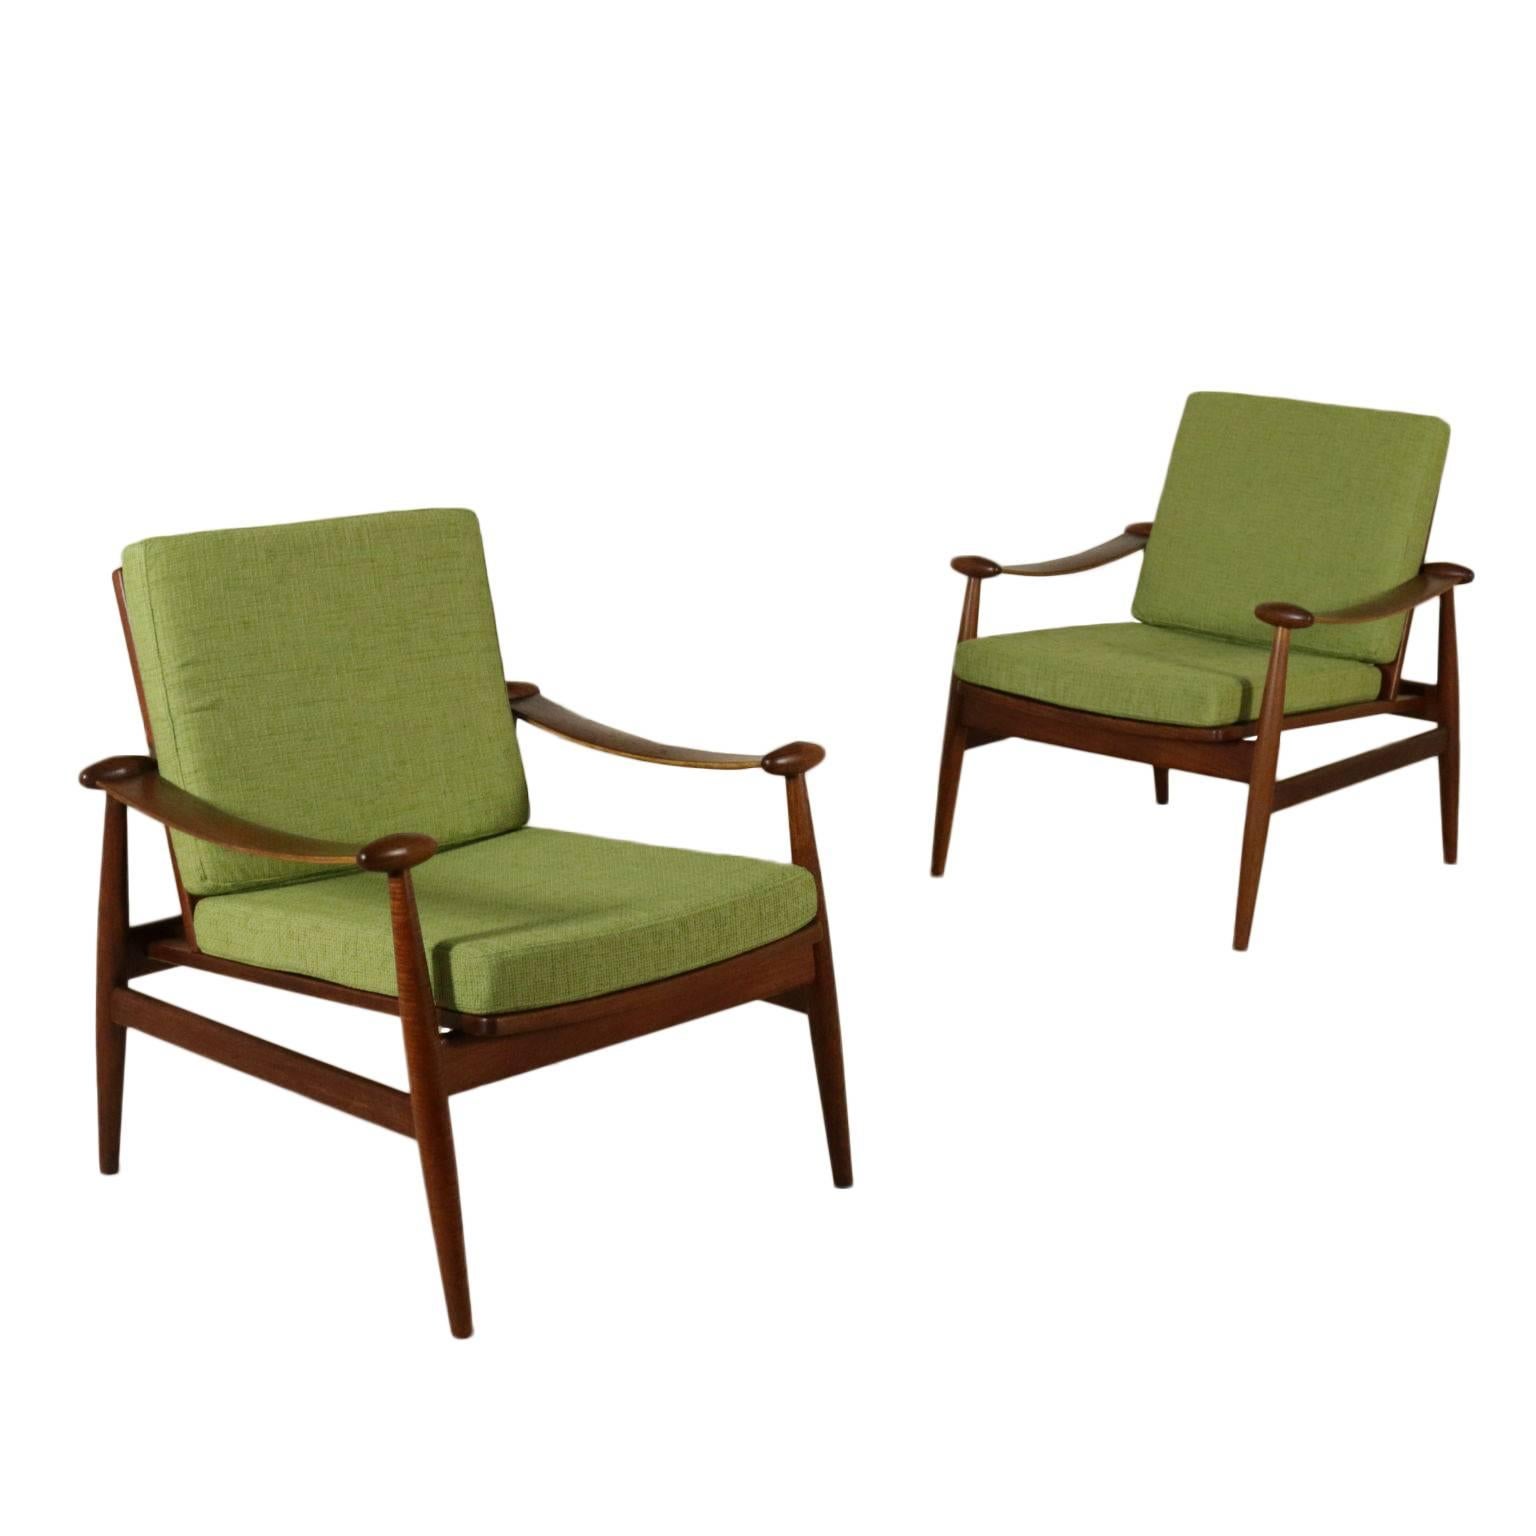 Pair of Armchairs Designed by Finn Juhl Teak Vintage, Italy, 1950s-1960s